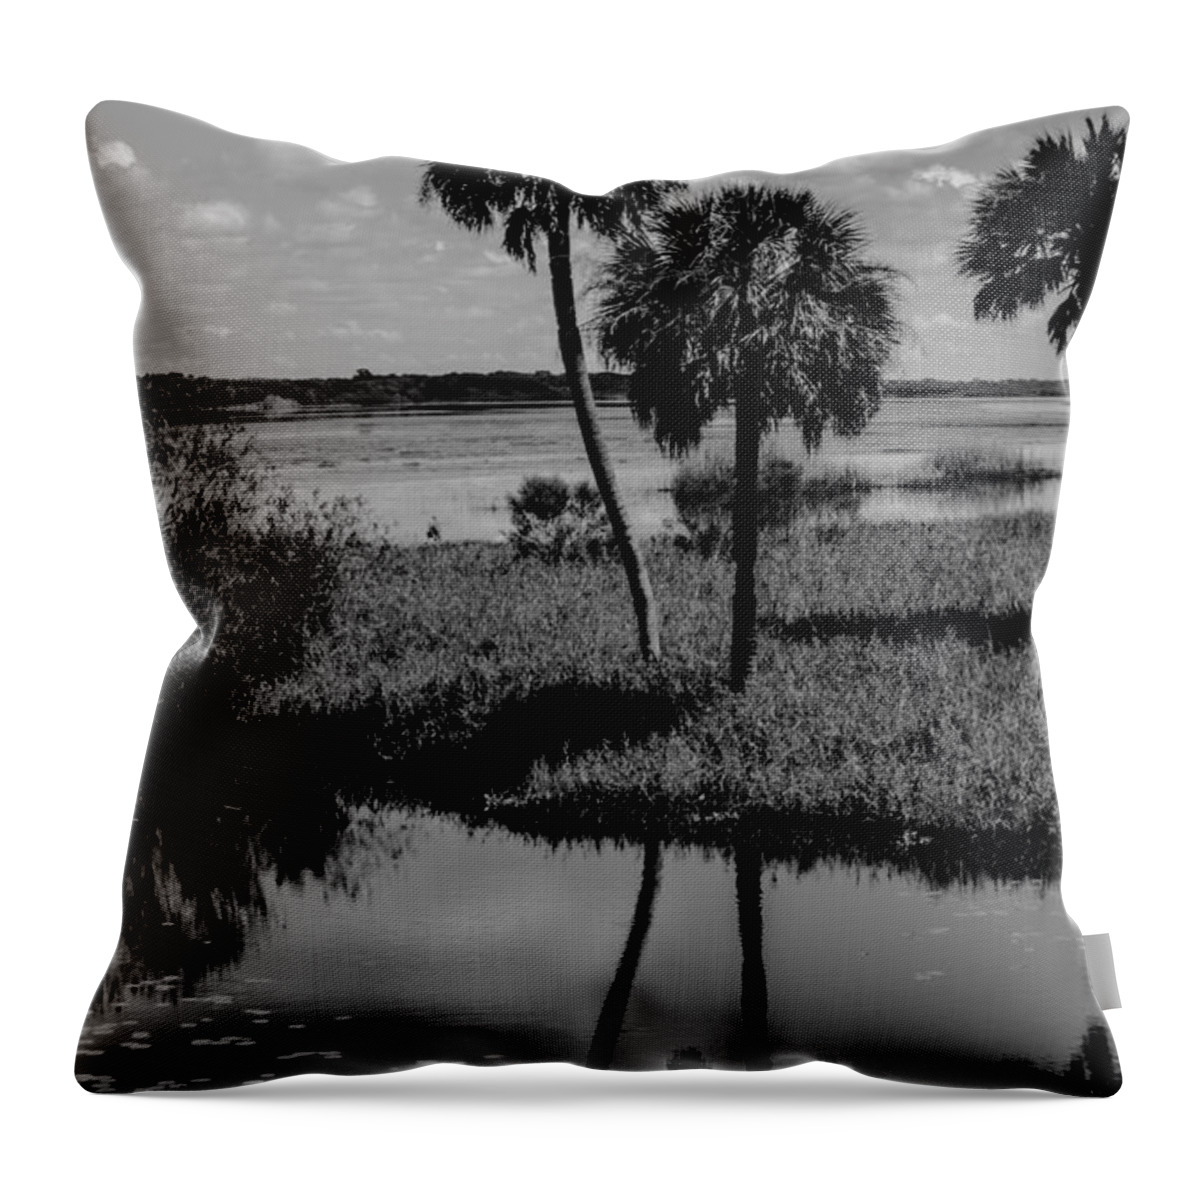  Throw Pillow featuring the photograph Myakka River Reflections by Susan Molnar